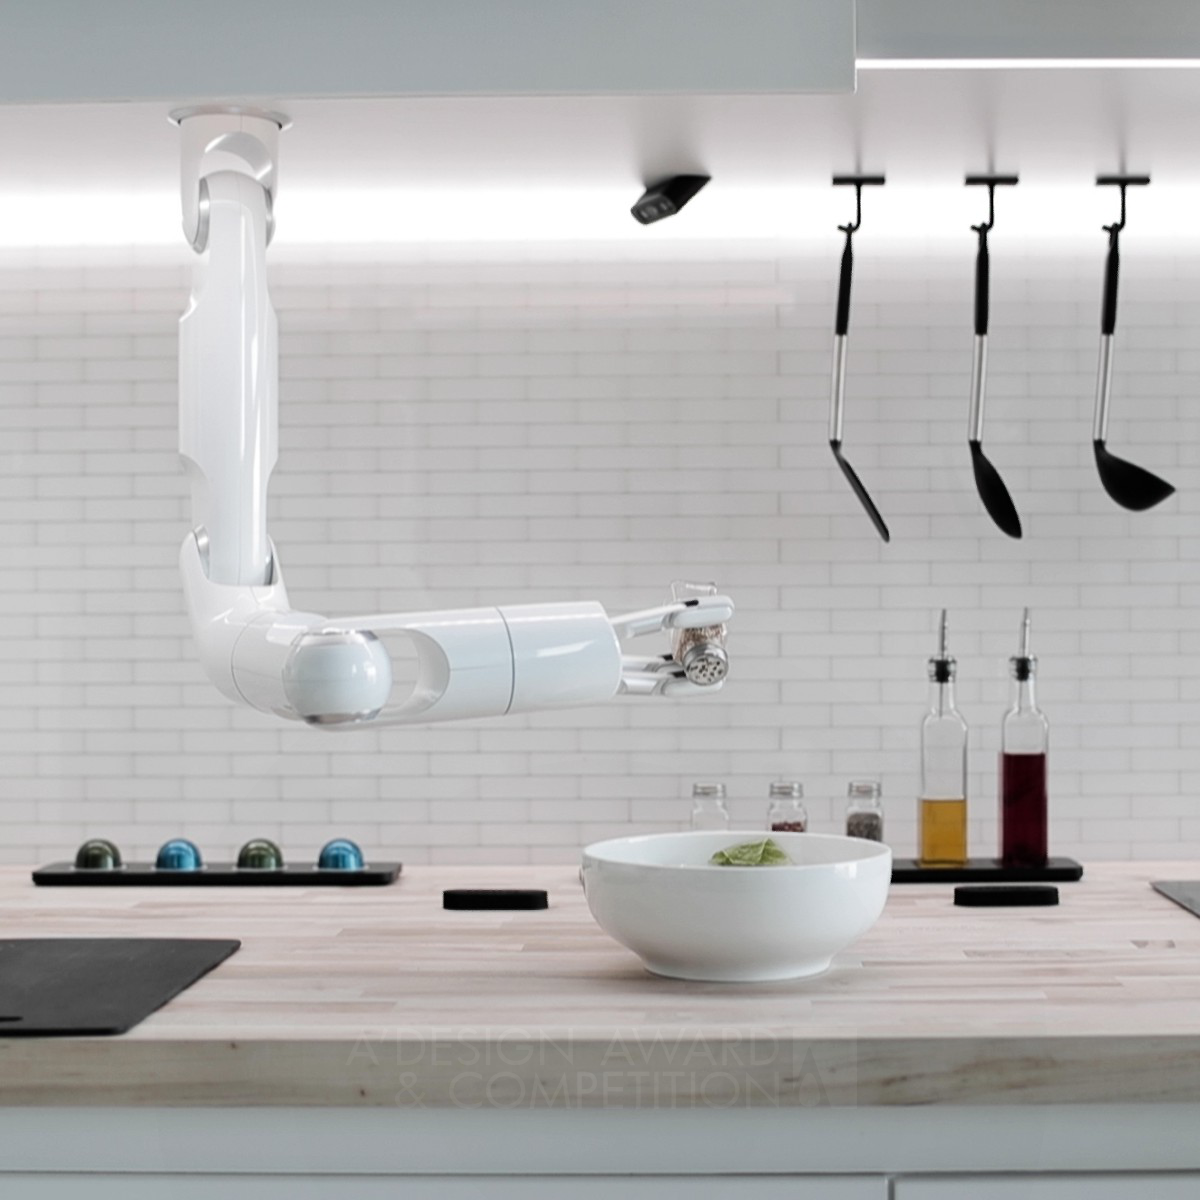 Think Tank Team wins Platinum at the prestigious A' Home Appliances Design Award with Samsung Bot Chef Robotic Arm.